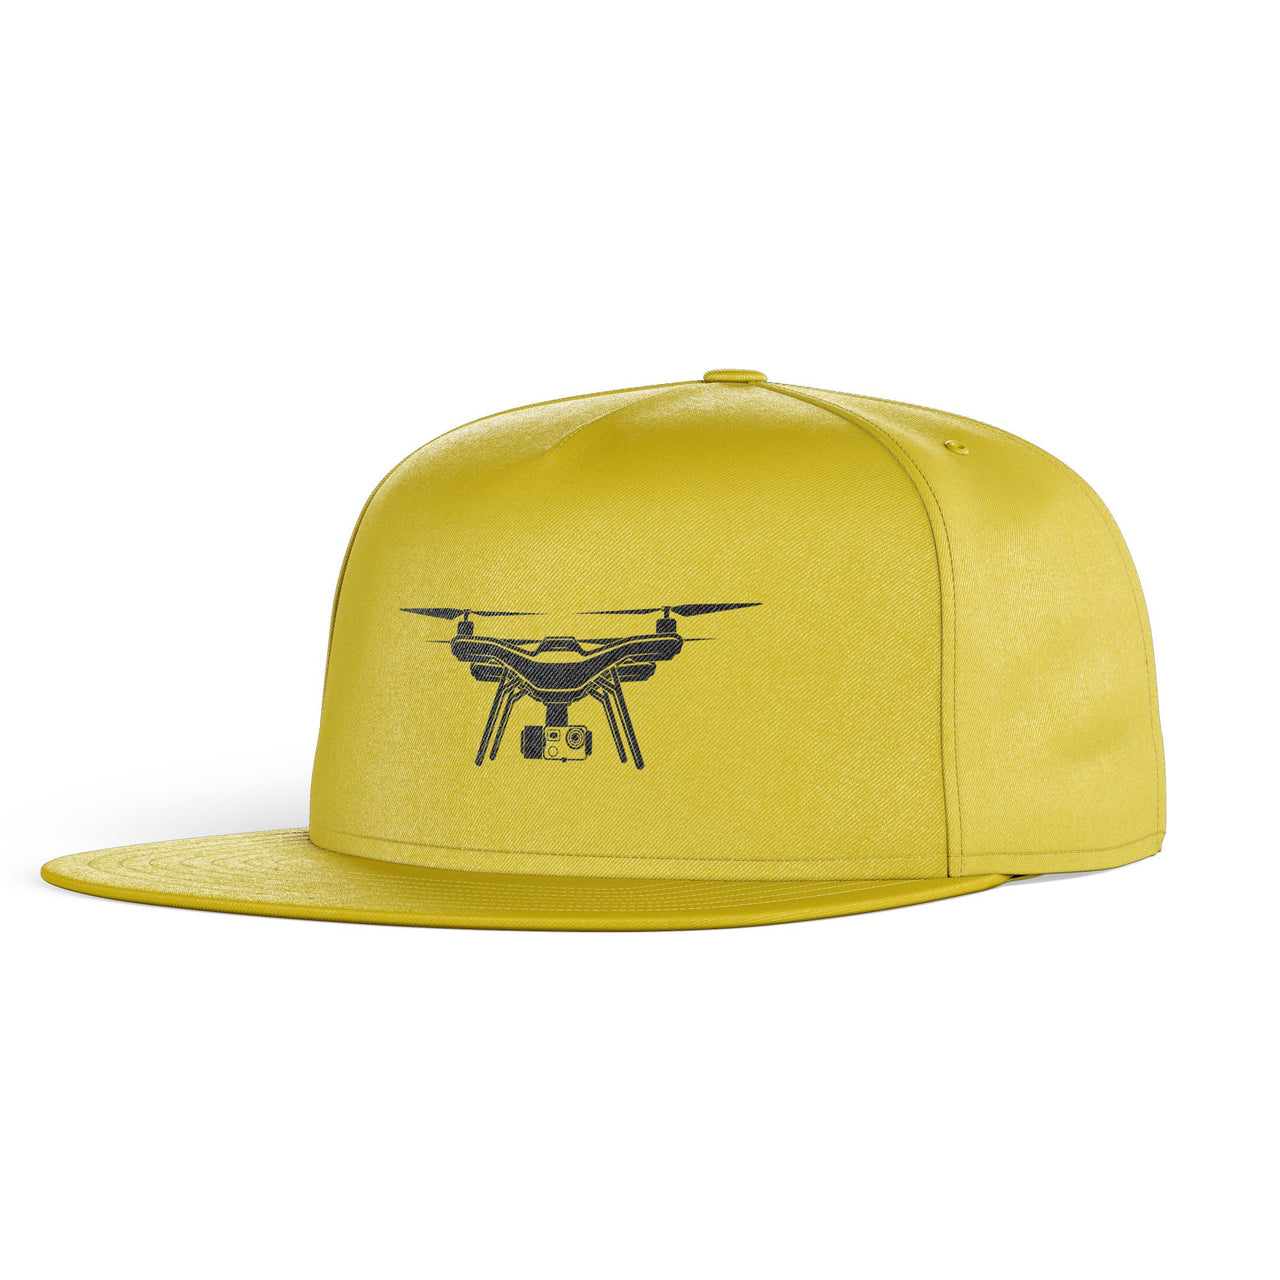 Drone Silhouette Designed Snapback Caps & Hats